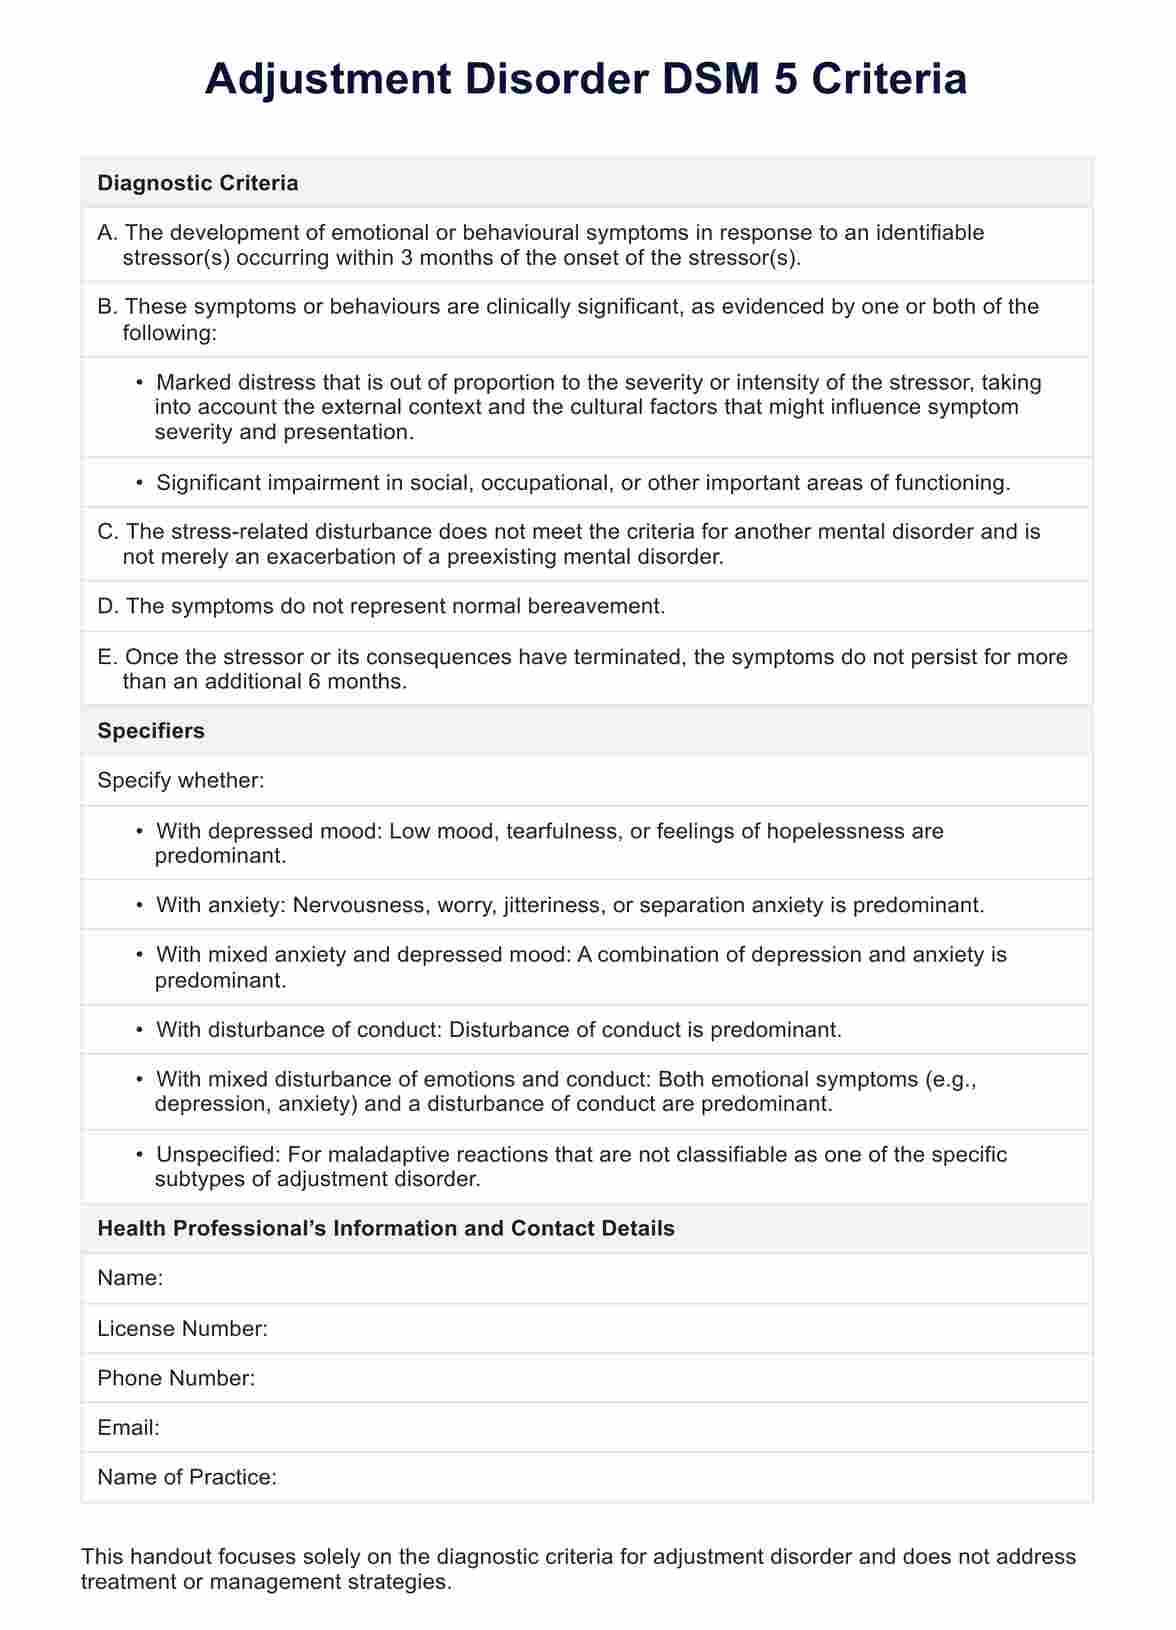 Adjustment Disorder DSM 5 Criteria PDF Example